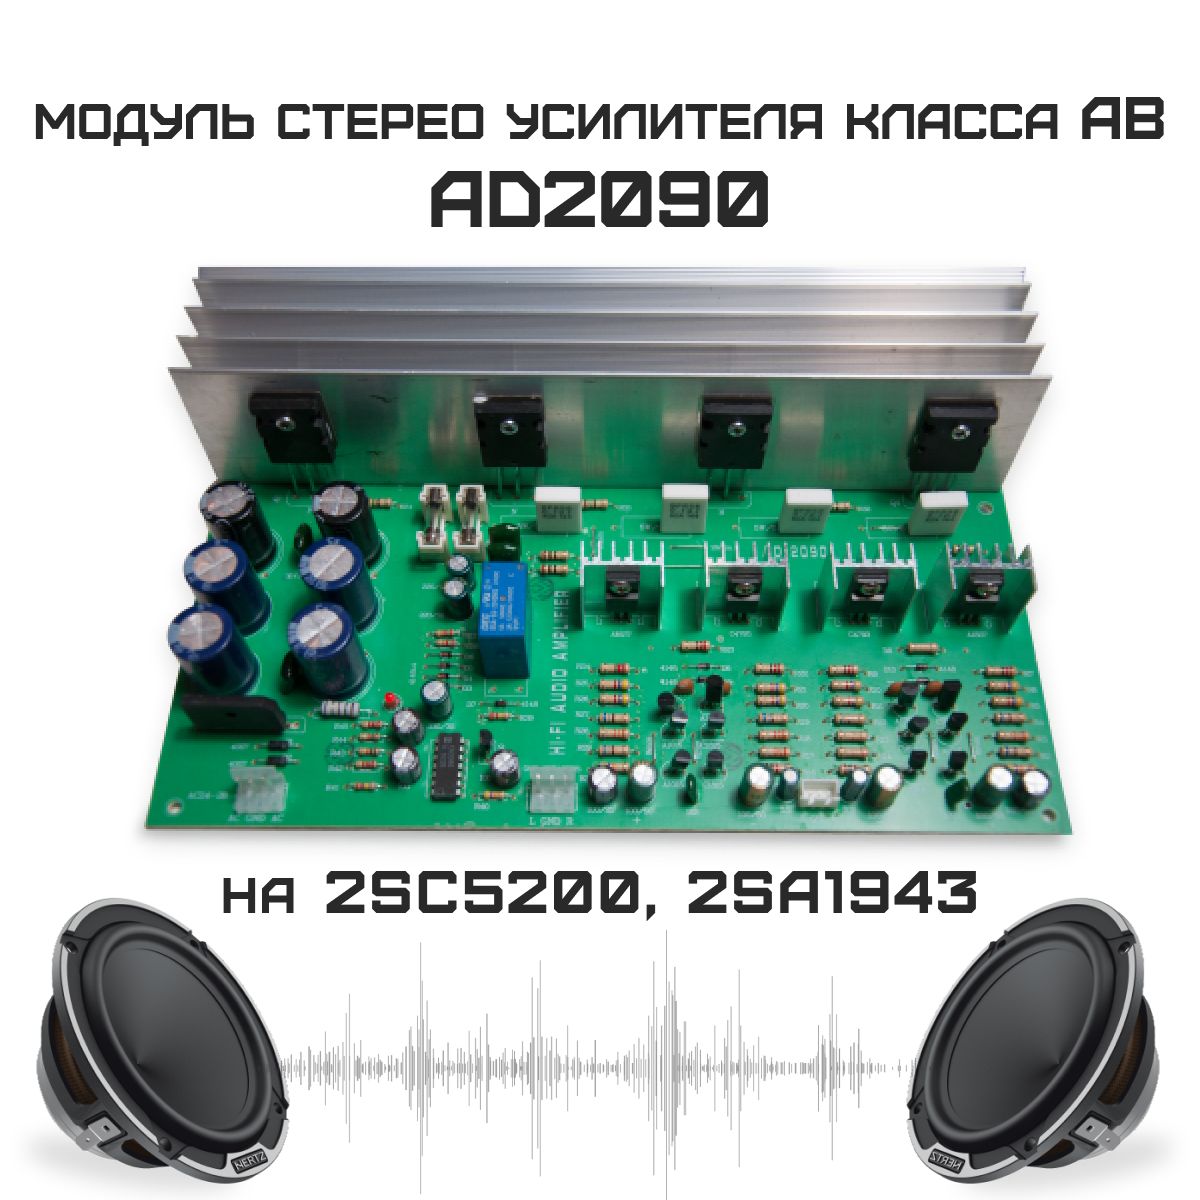 Плата усилителя (2x70Вт) класса АВ на 2SC5200, 2SA1943 (AD 2090), модуль усилителя звука для DIY